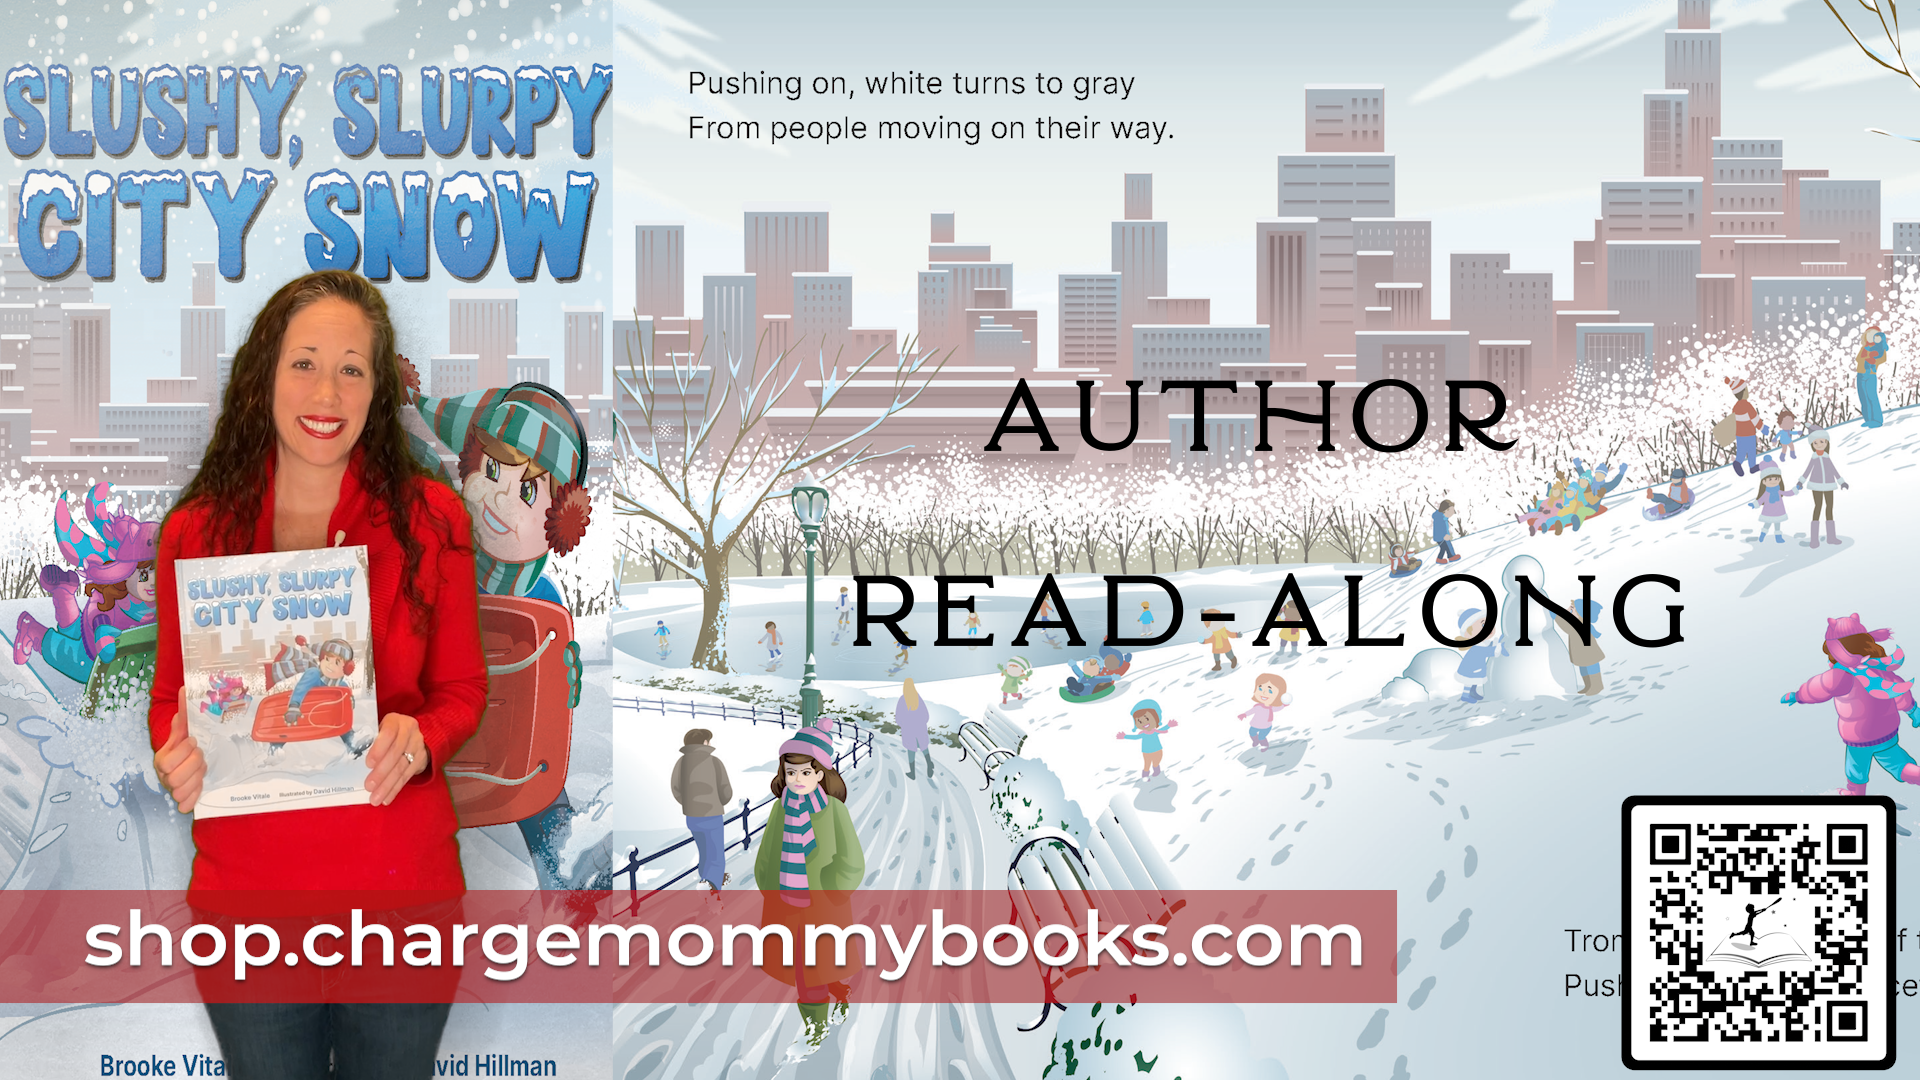 Load video: Read-along with Brooke Vitale, author of Slushy, Slurpy City Snow.